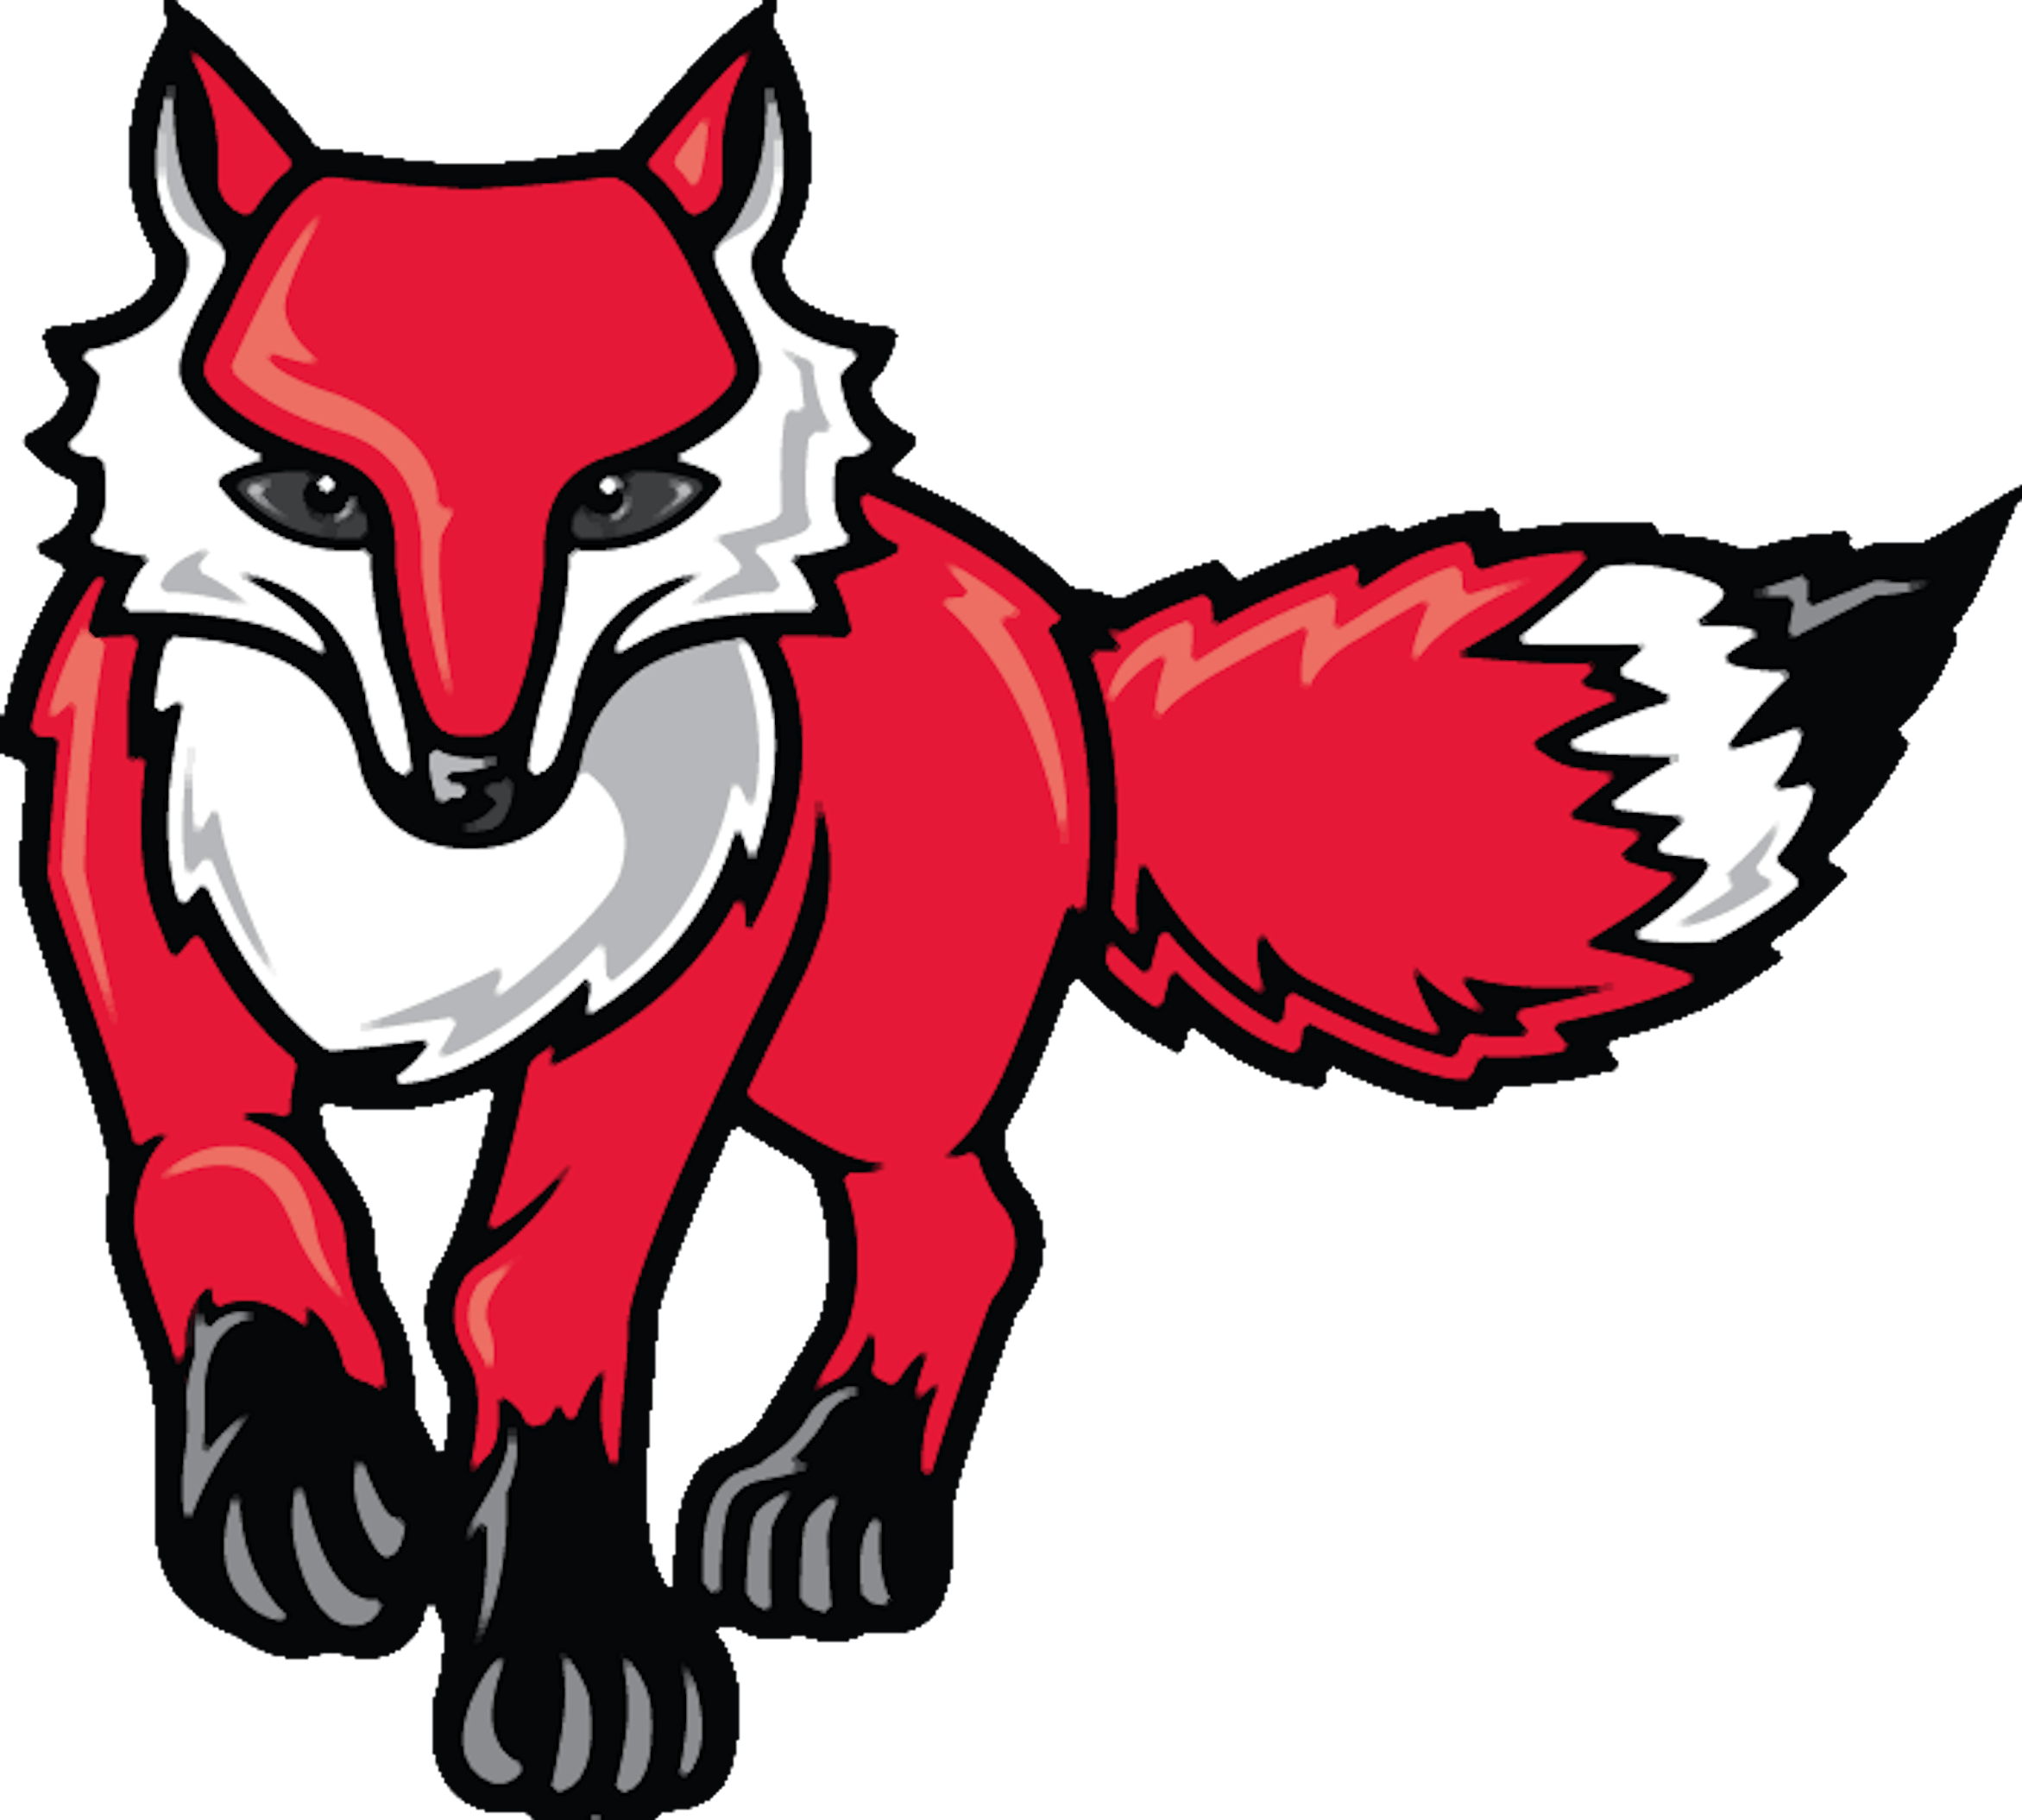 Red Fox Head Logo - Red Fox. Free Image clip art online